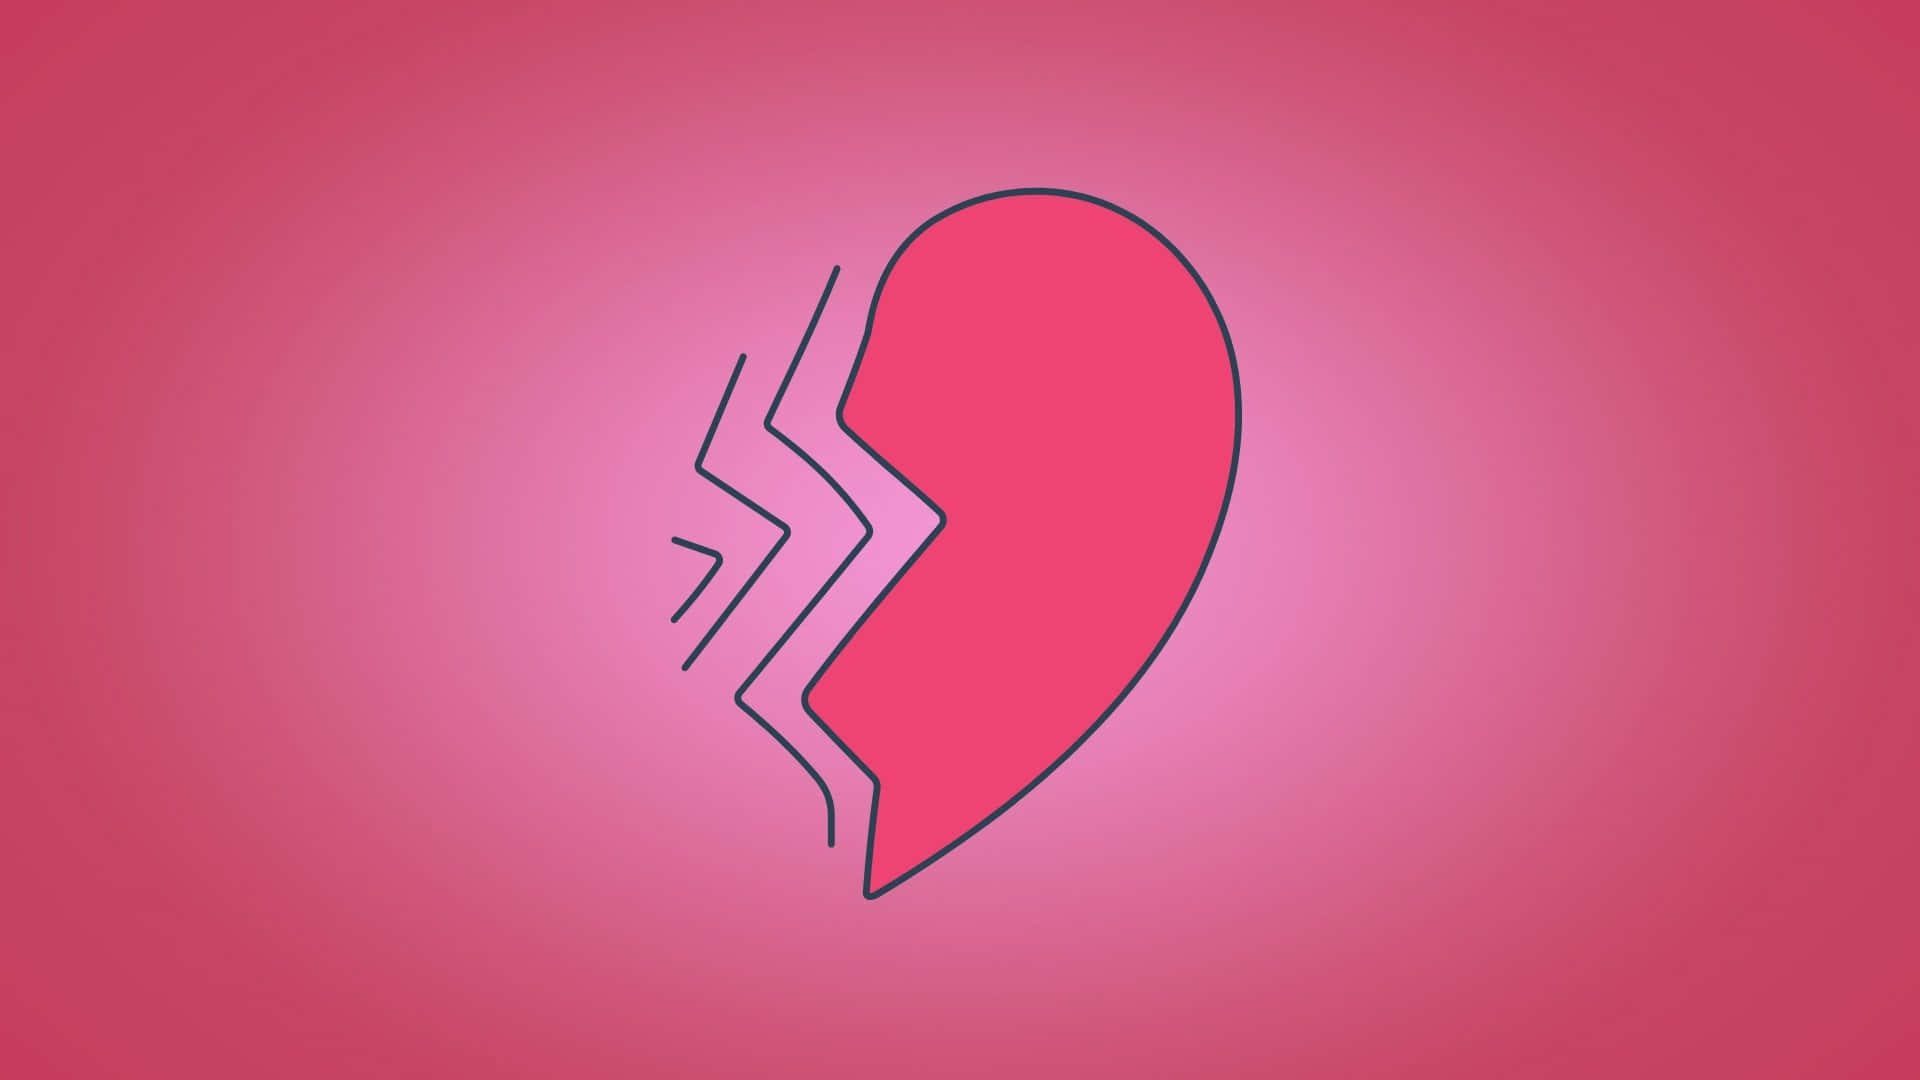 Broken Heart Graphicon Pink Background Wallpaper